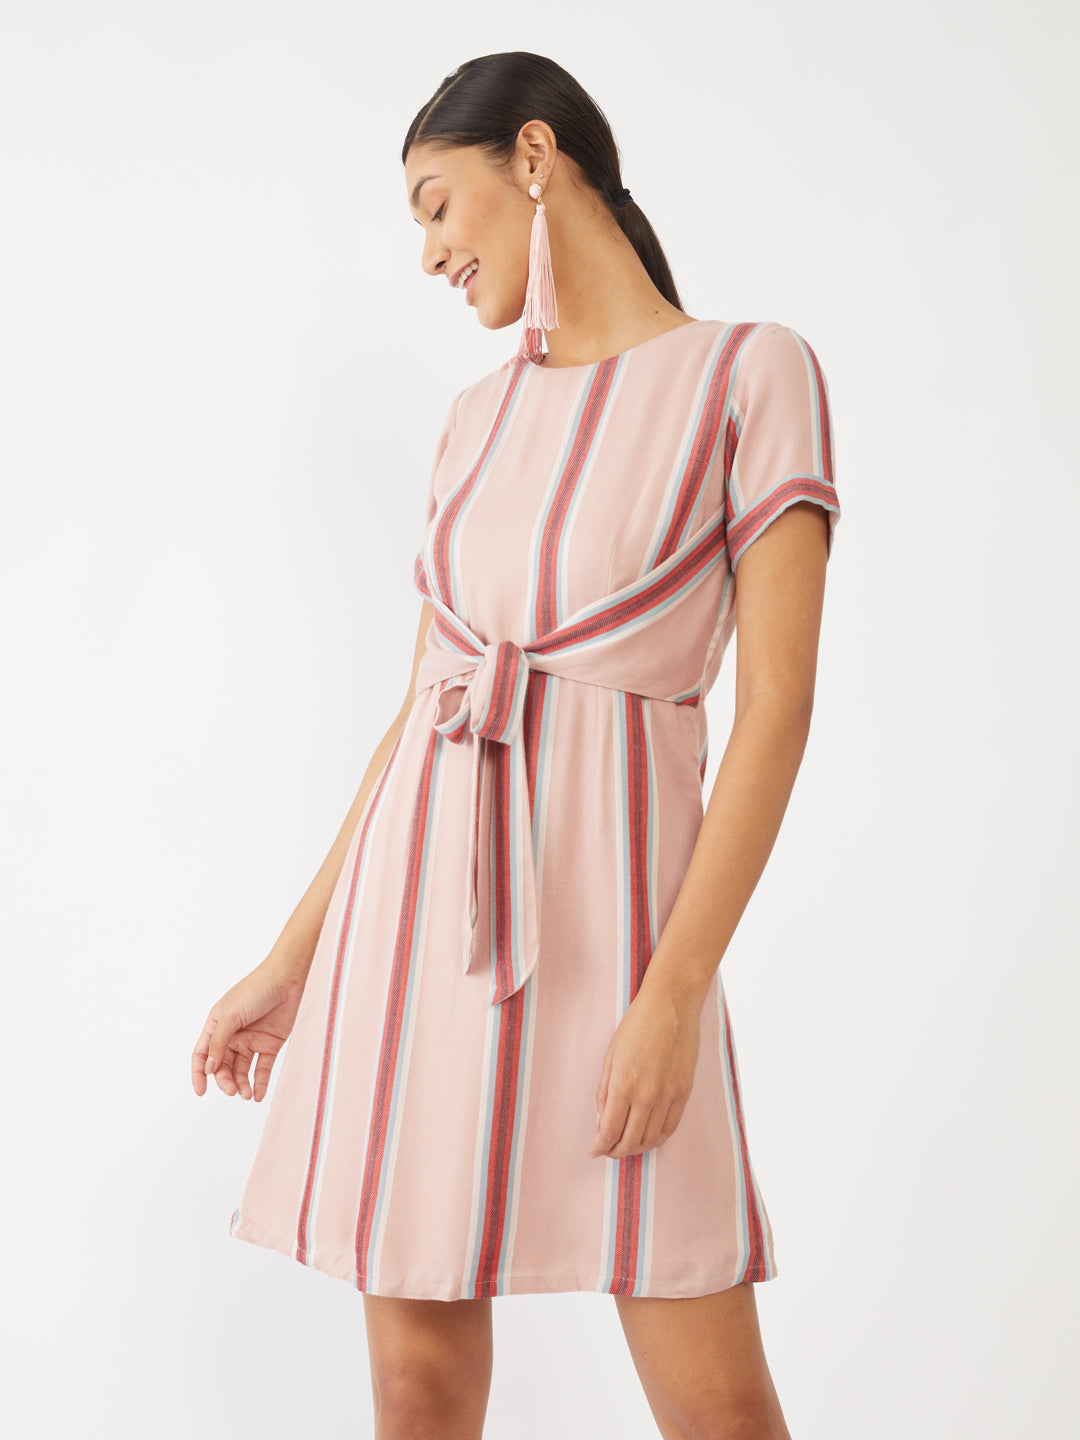 Peach Printed Short Dress For Women